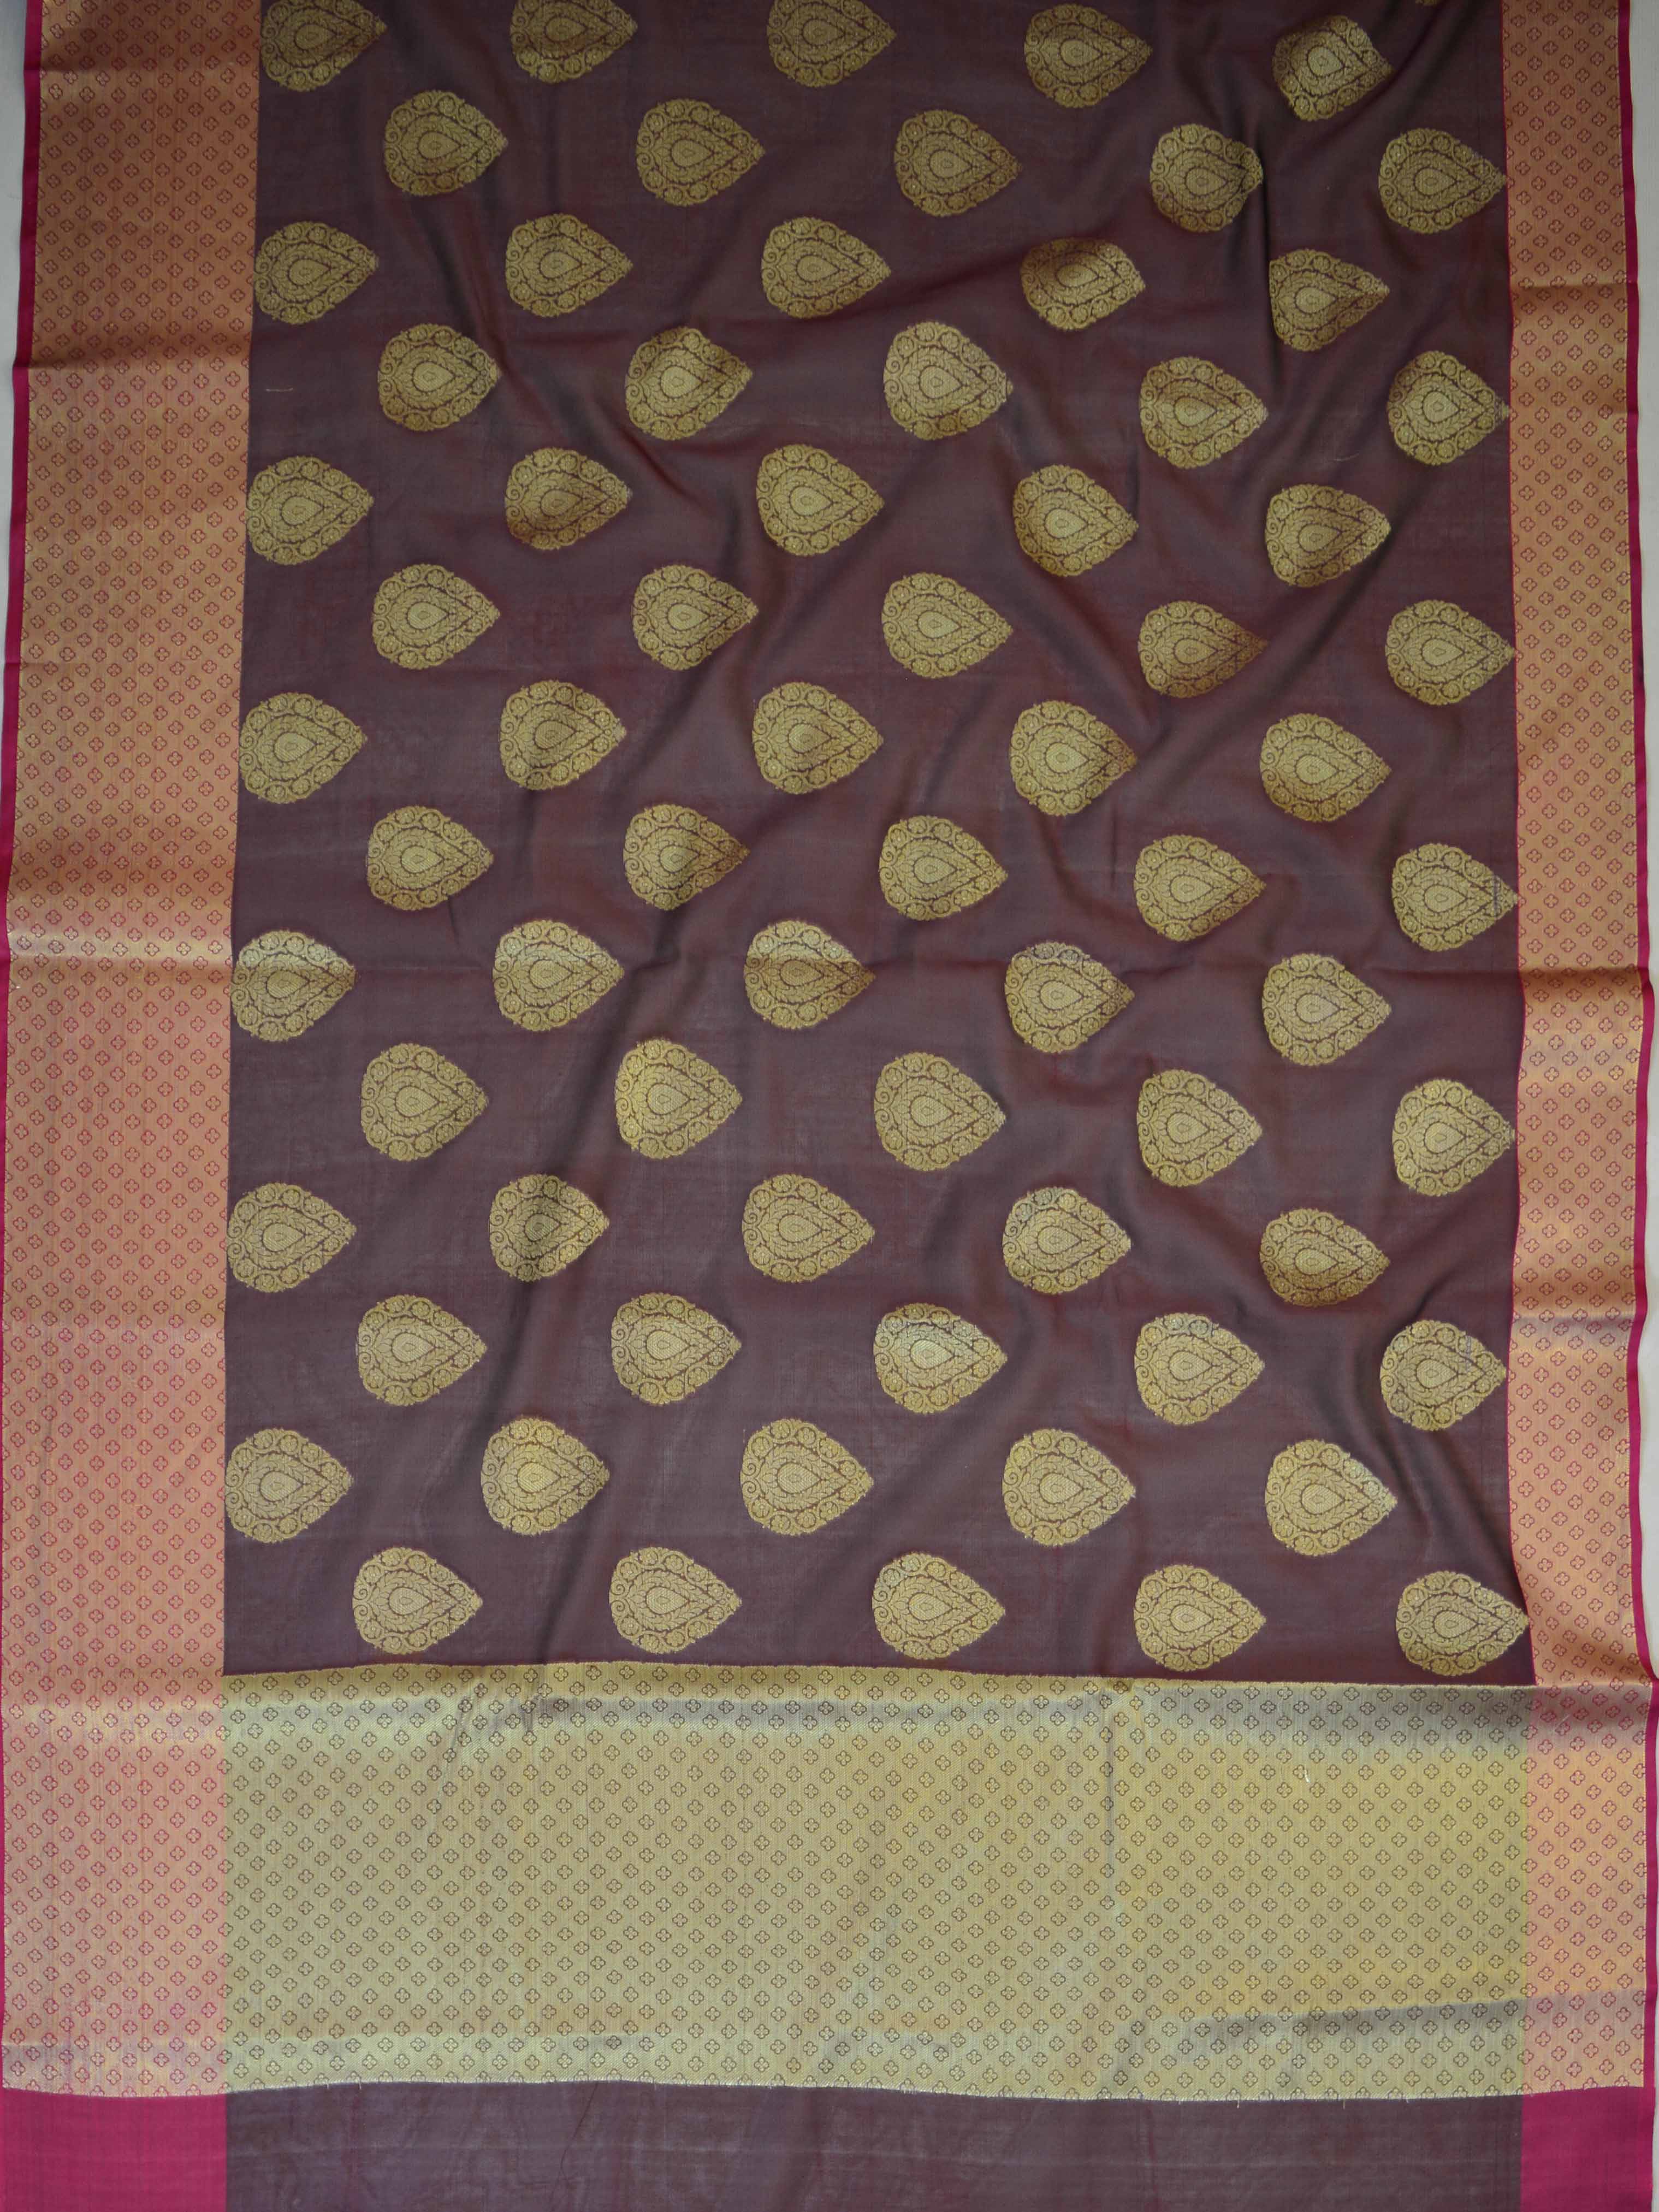 Banarasee Cotton Silk Mix Saree With Zari Buta Design-Maroon